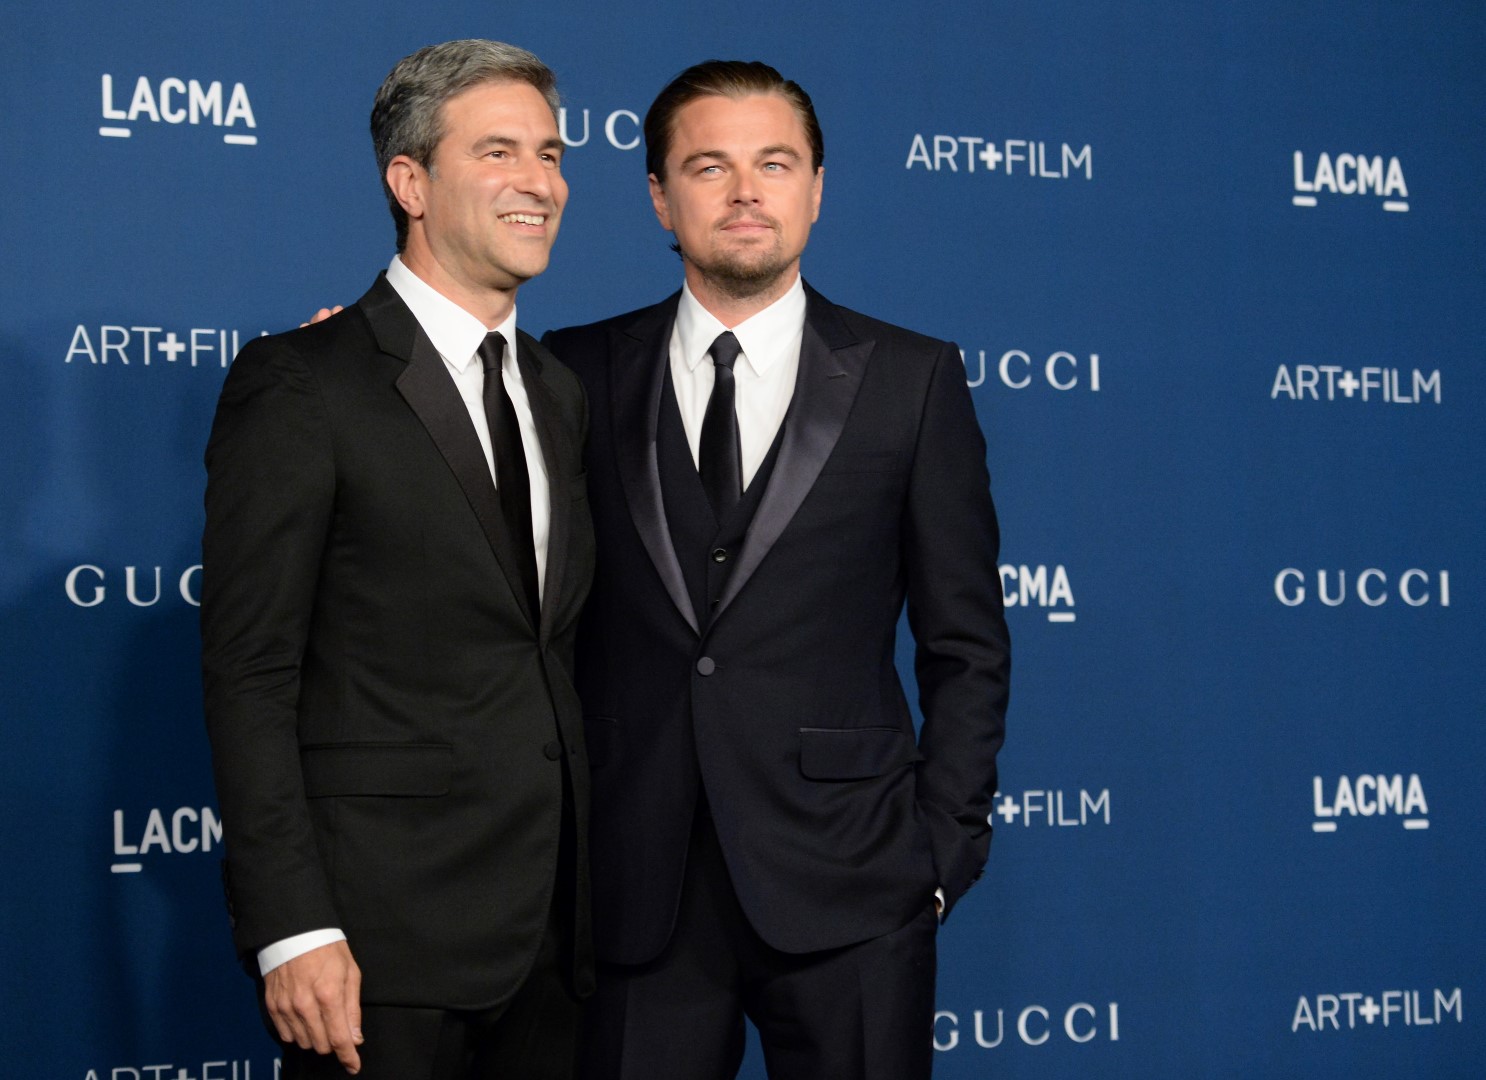 LACMA Art+Film Gala 2015: in onore di James Turrell e Alejandro G. Iñárritu, co-presieduto da Leonardo DiCaprio